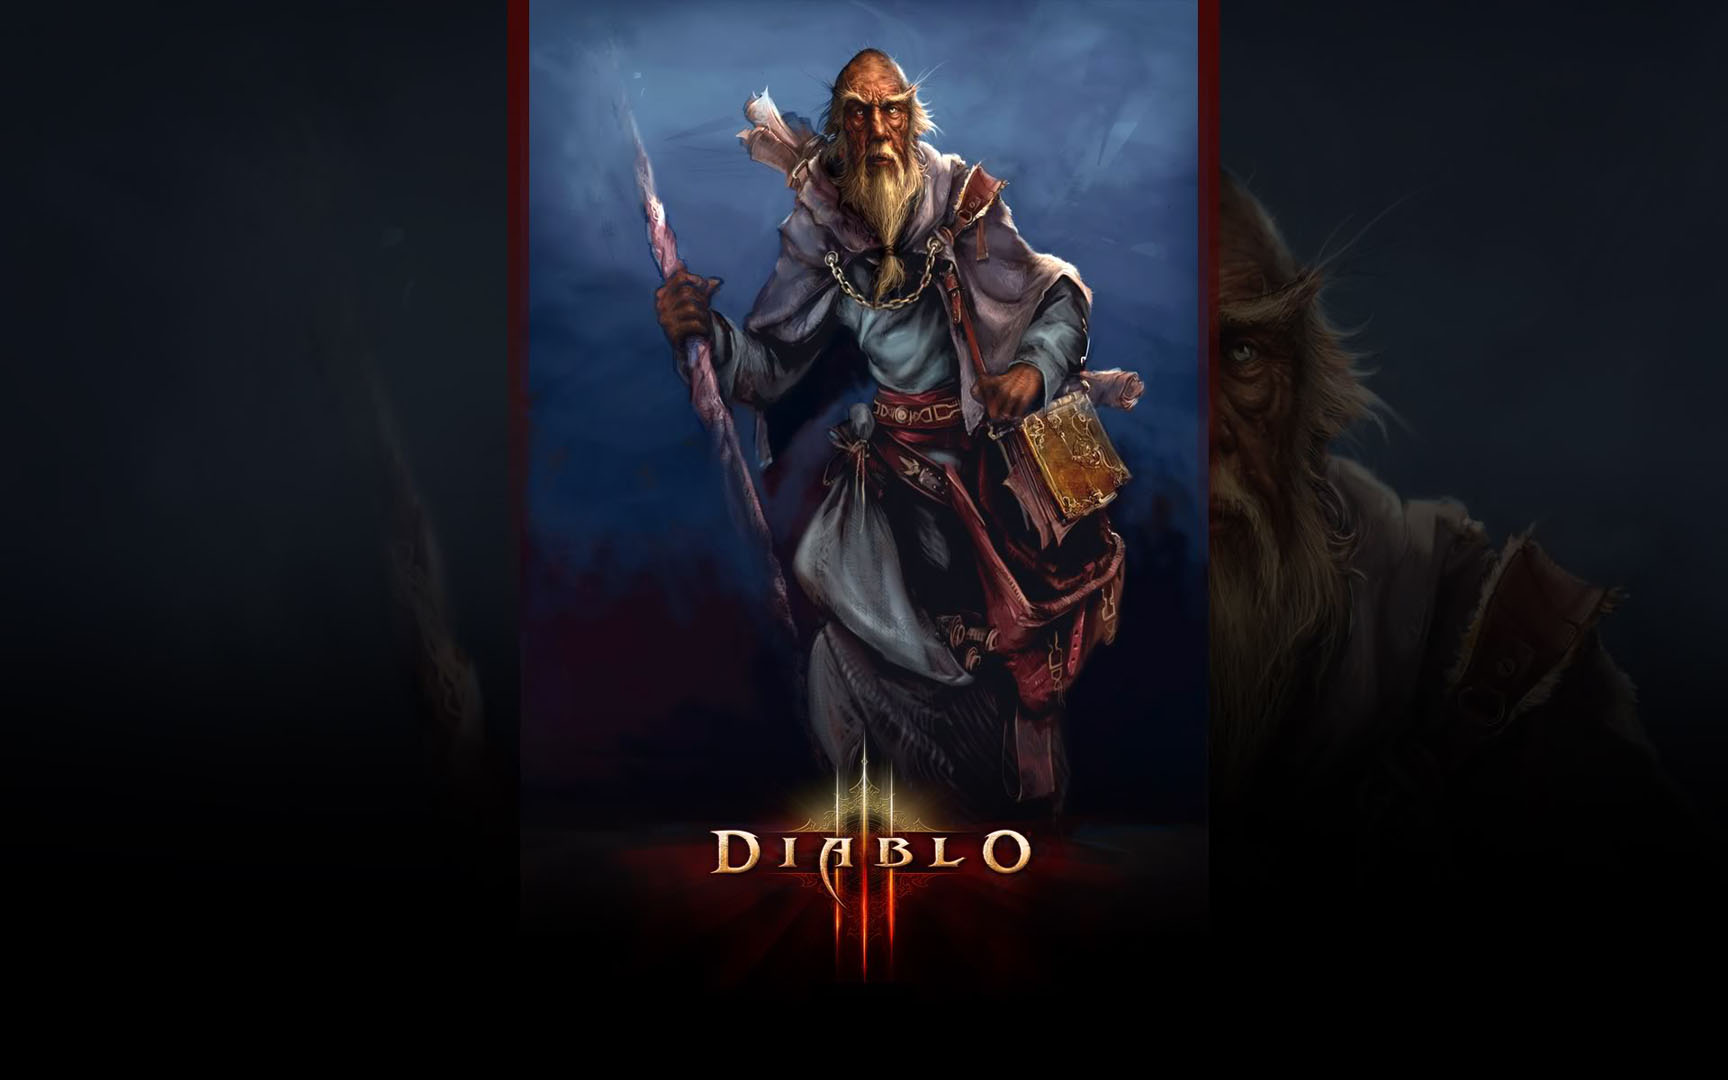 Diablo Wizard Wallpaper HD In Games Imageci